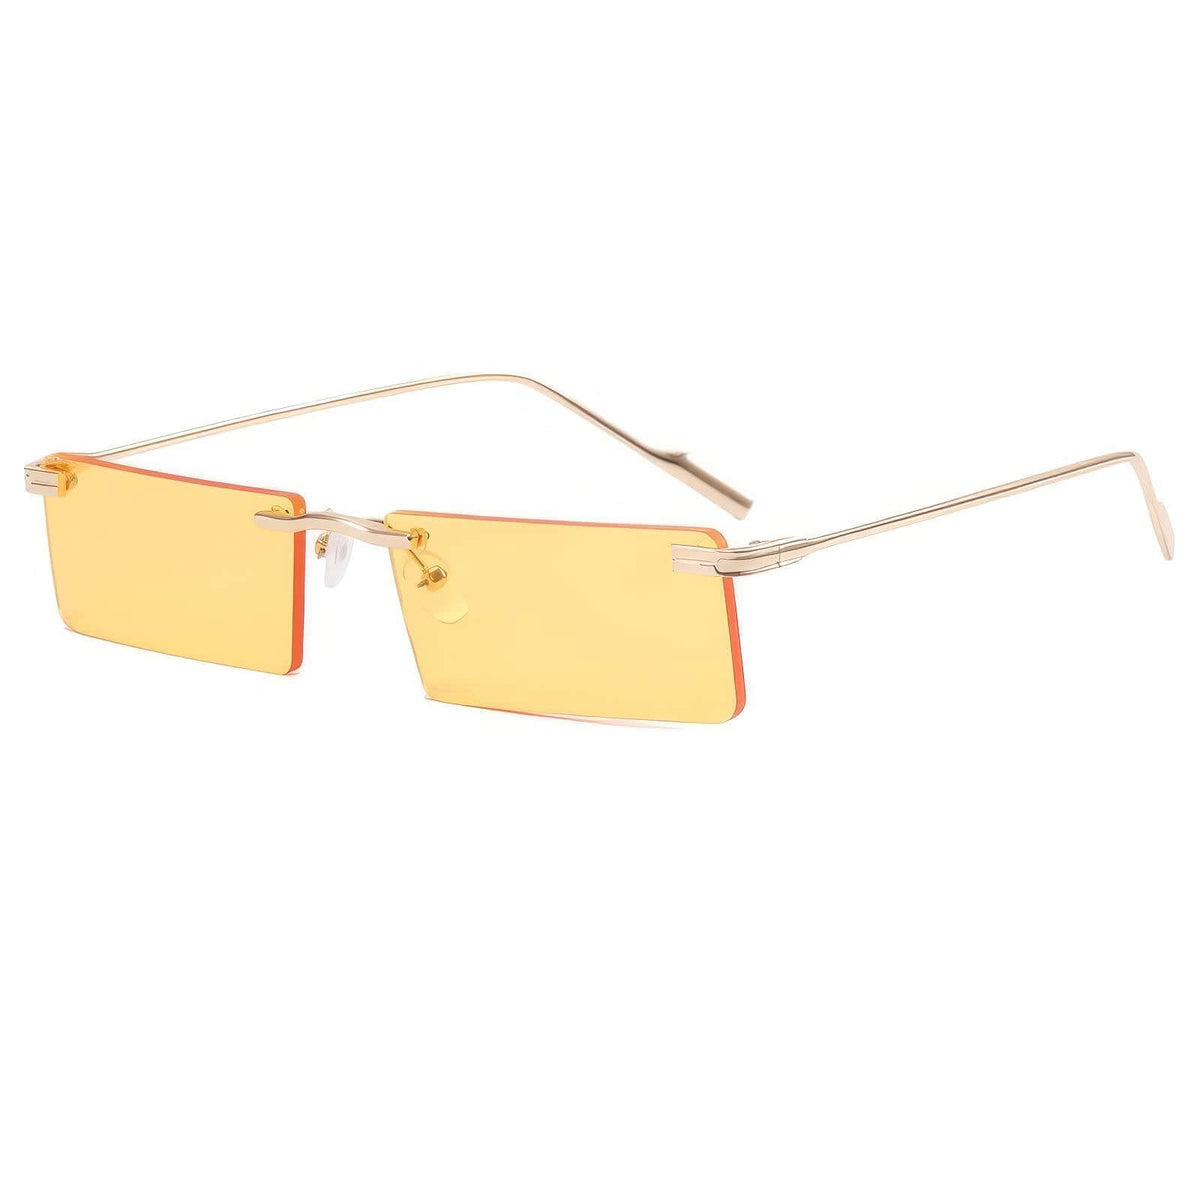 Square Small Eyewear Stylish Frames Yellow/Gold / Resin